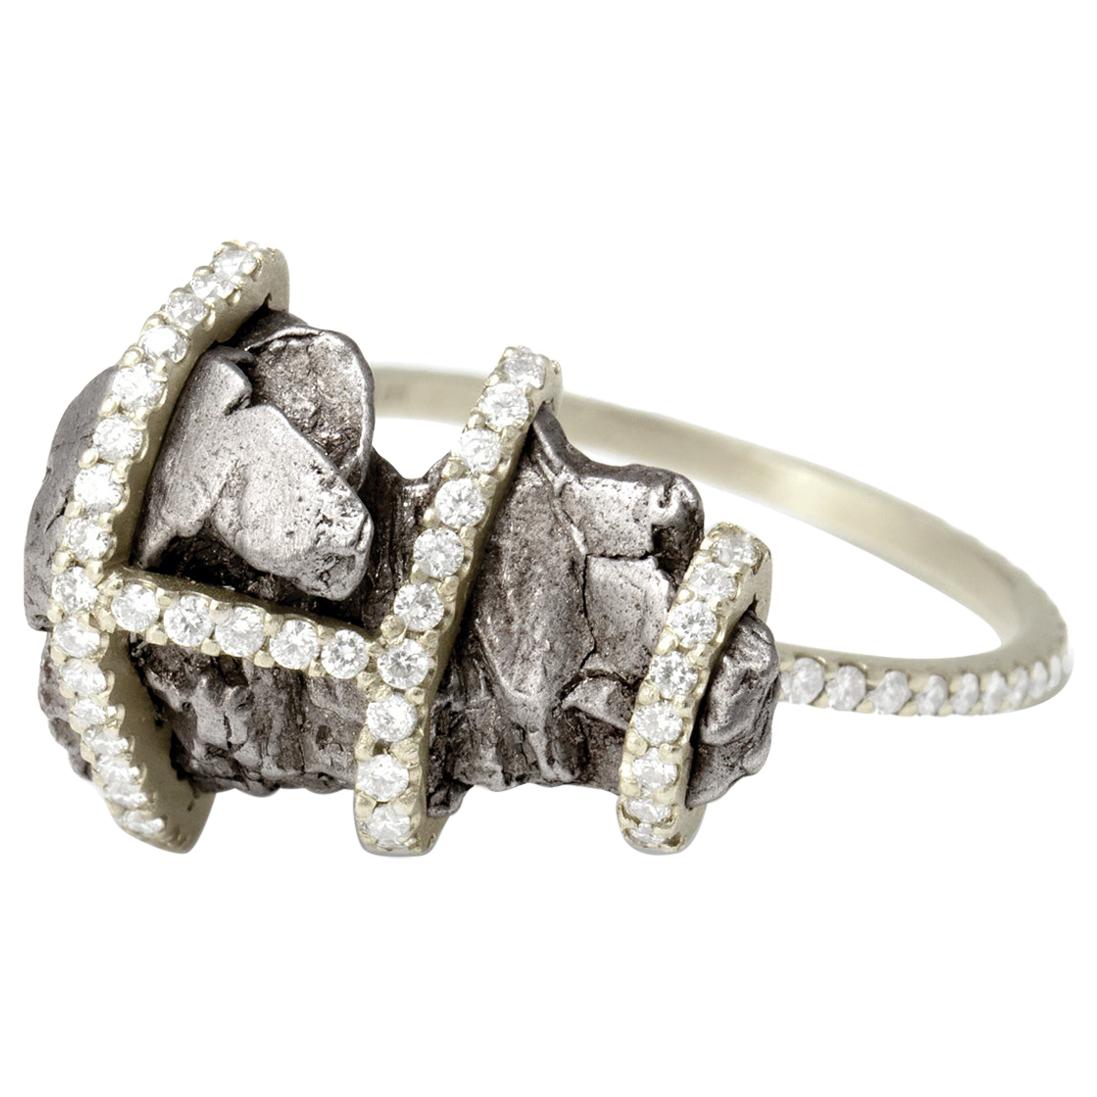 Monique Péan Meteorite Specimen and White Diamond Ring, 18 Carat White Gold